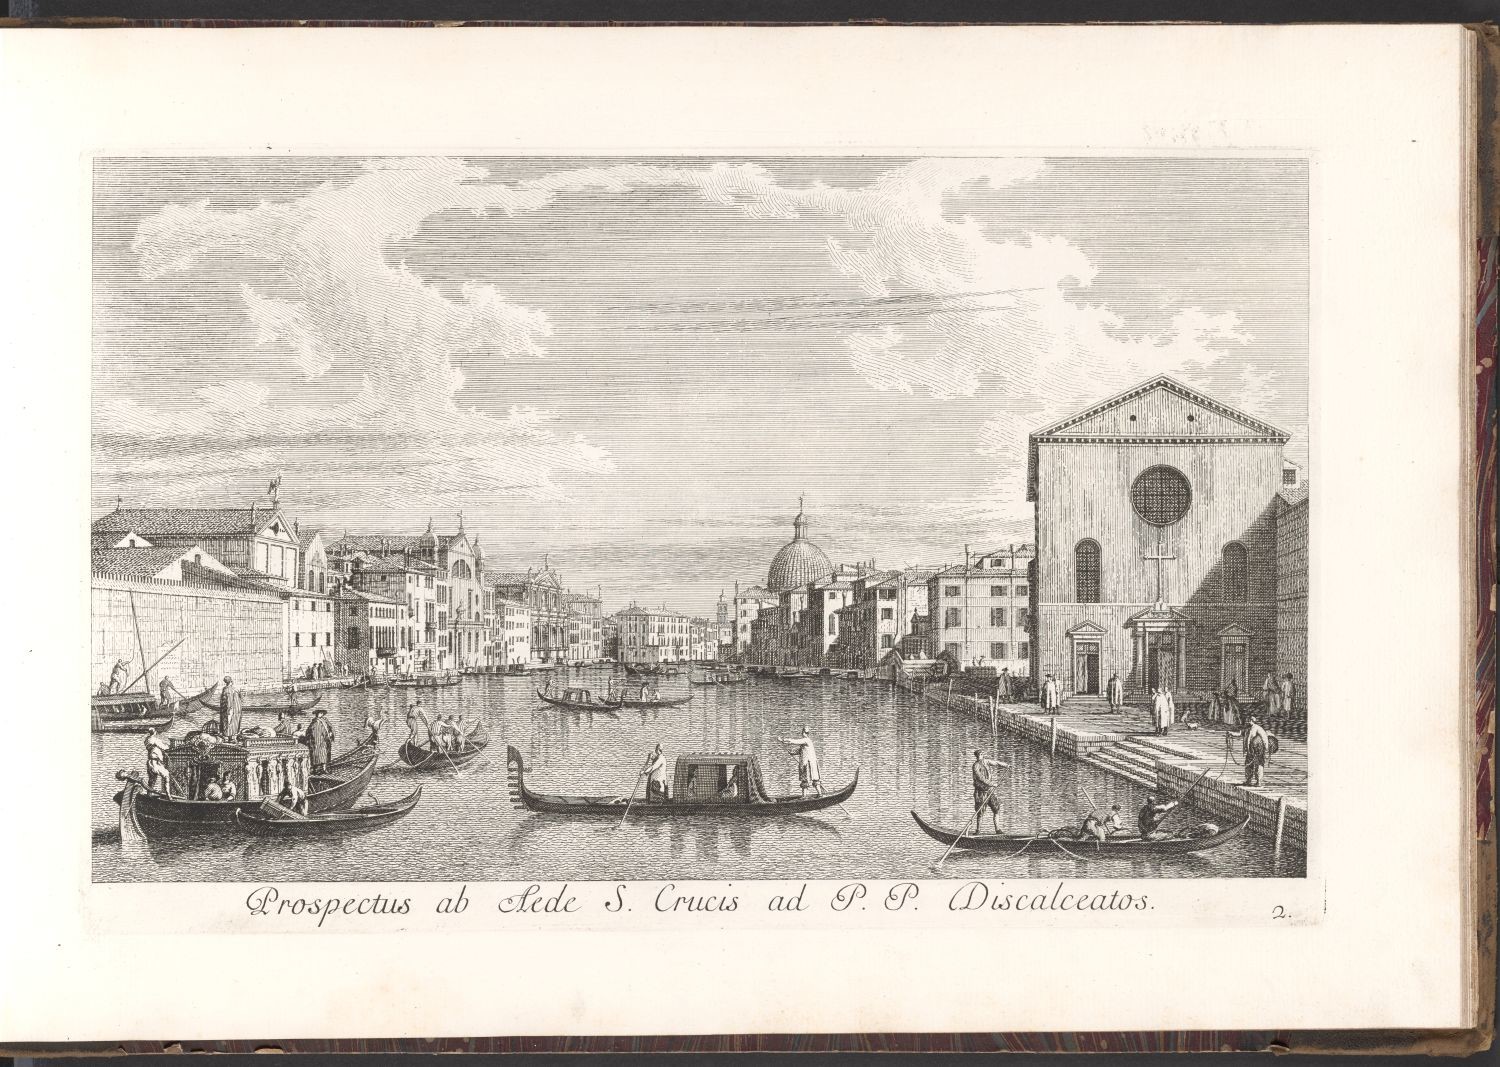 Venedig, 2. Prospectus ad Aede S. Crucis ad P.P. Discalceatos. (Stiftung Händelhaus, Halle CC BY-NC-SA)